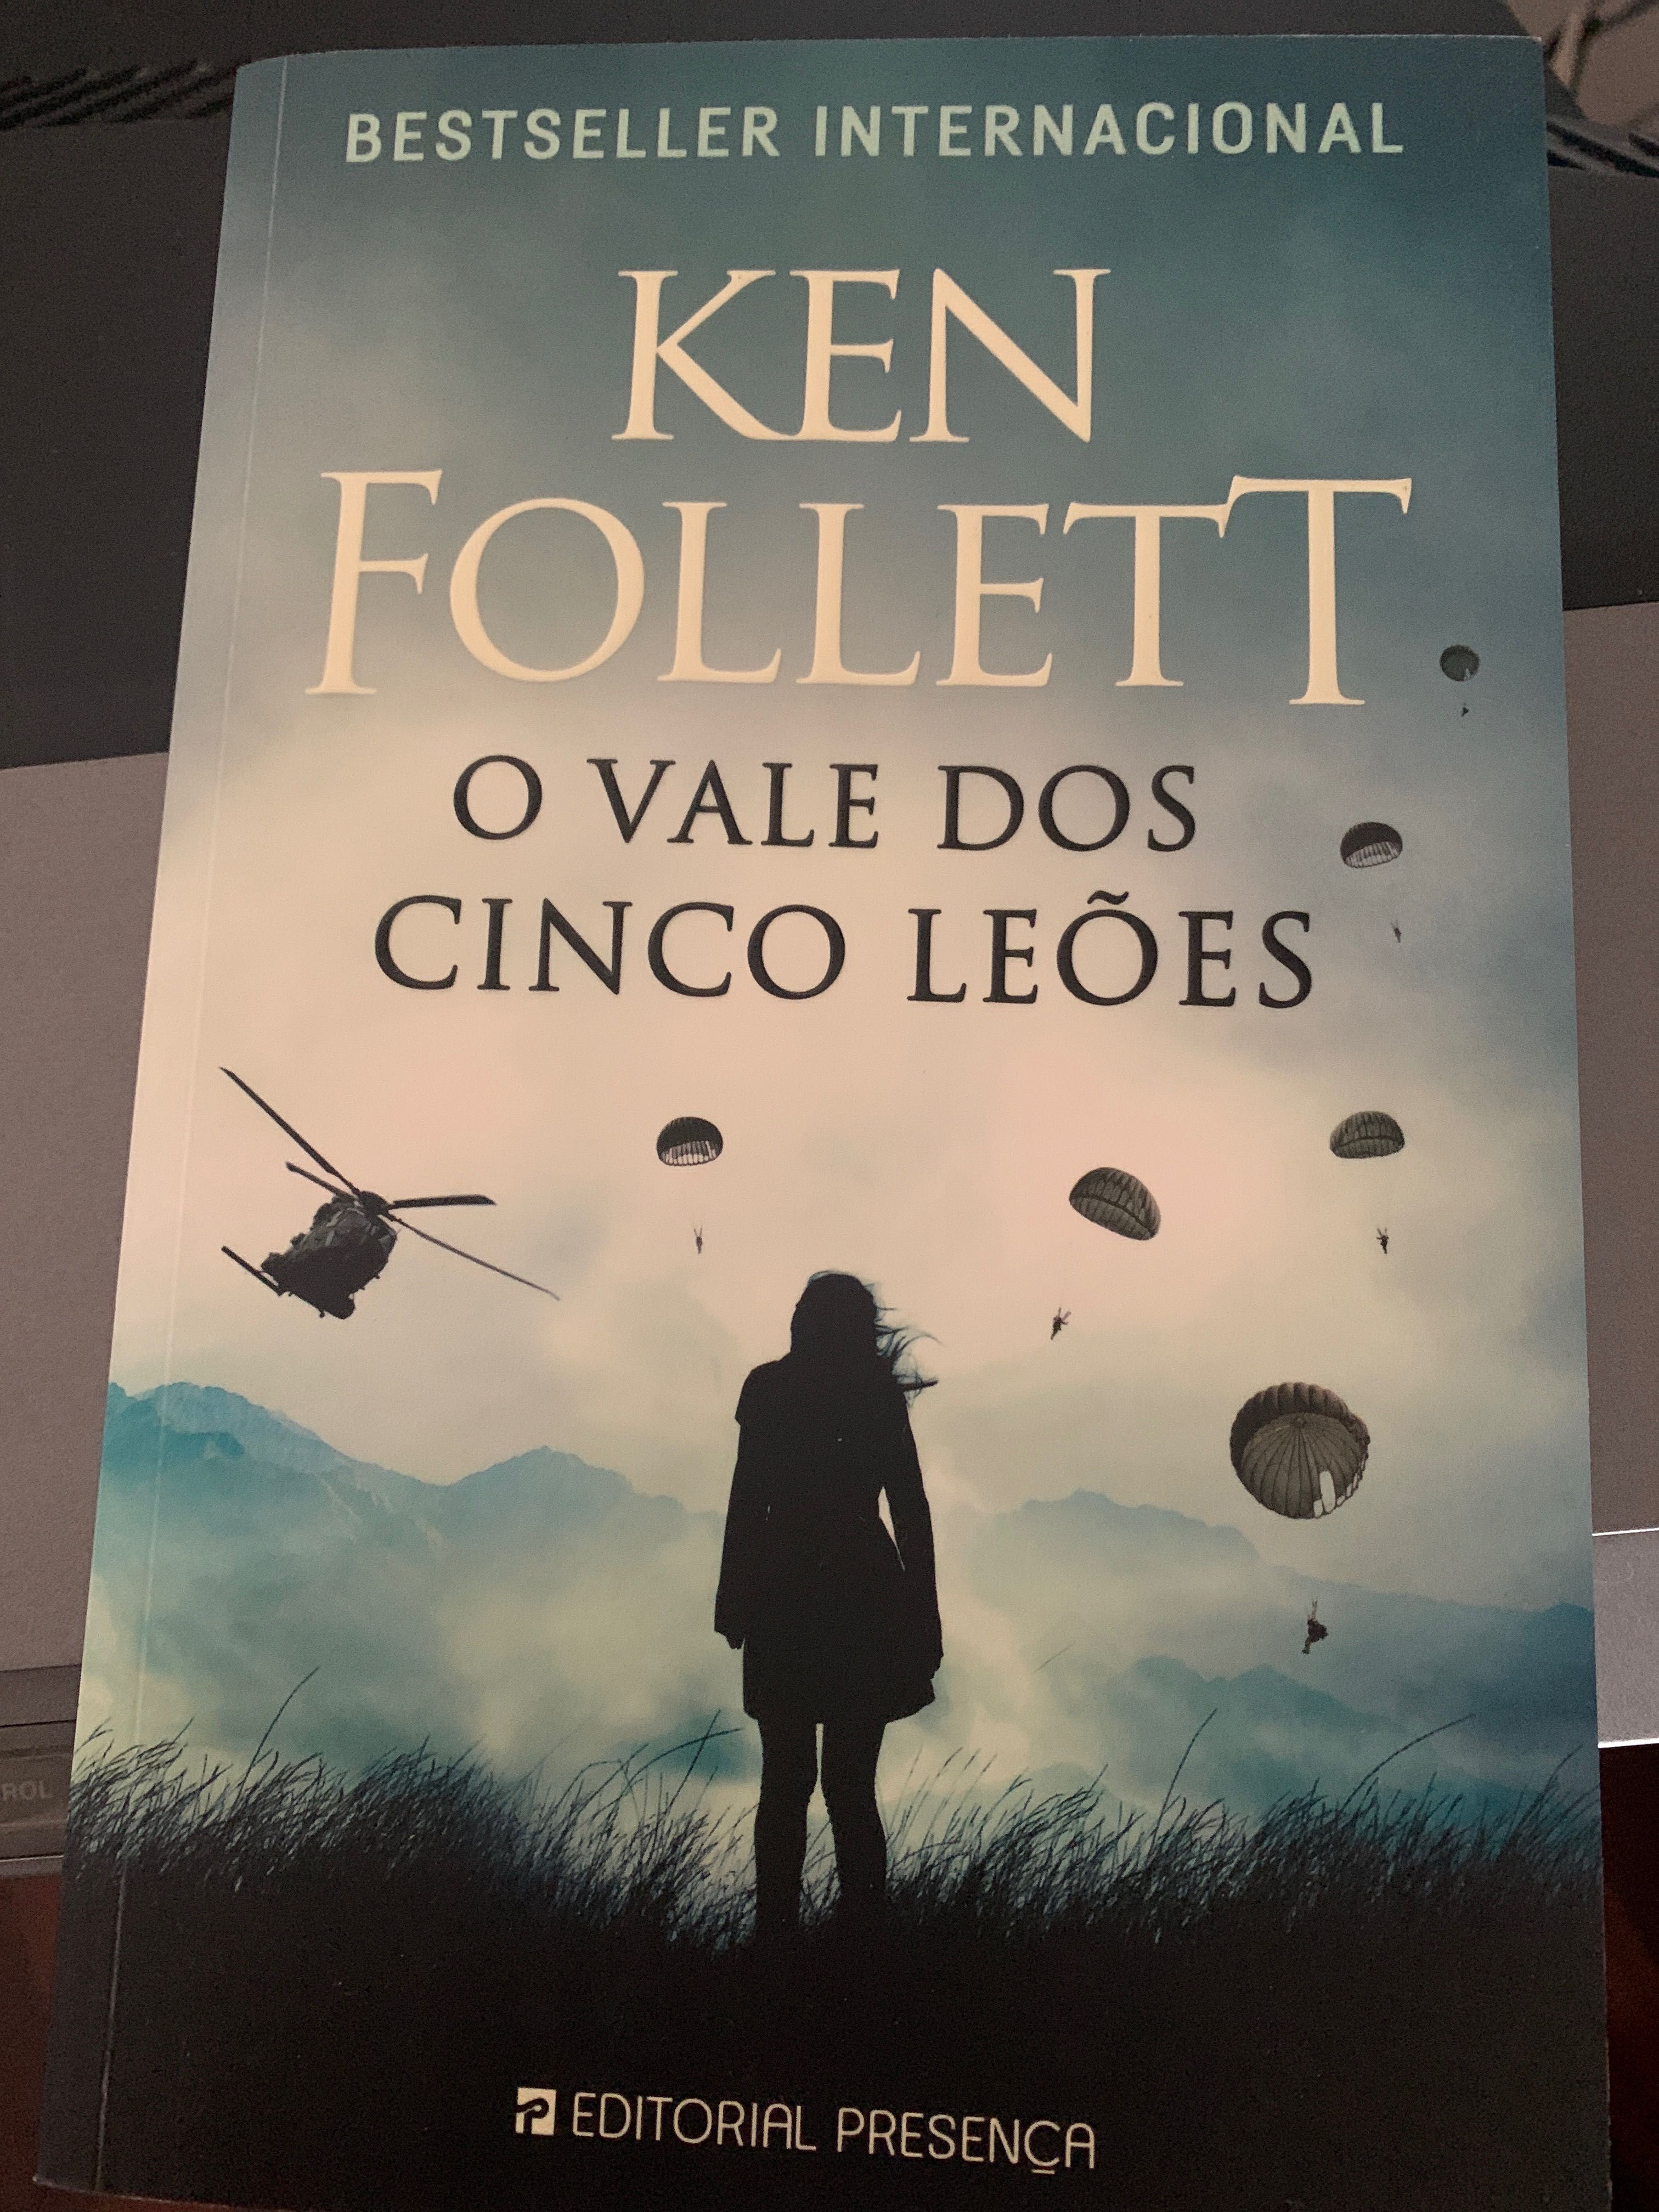 Livro Ken Follett “o vale dos 5 leões”